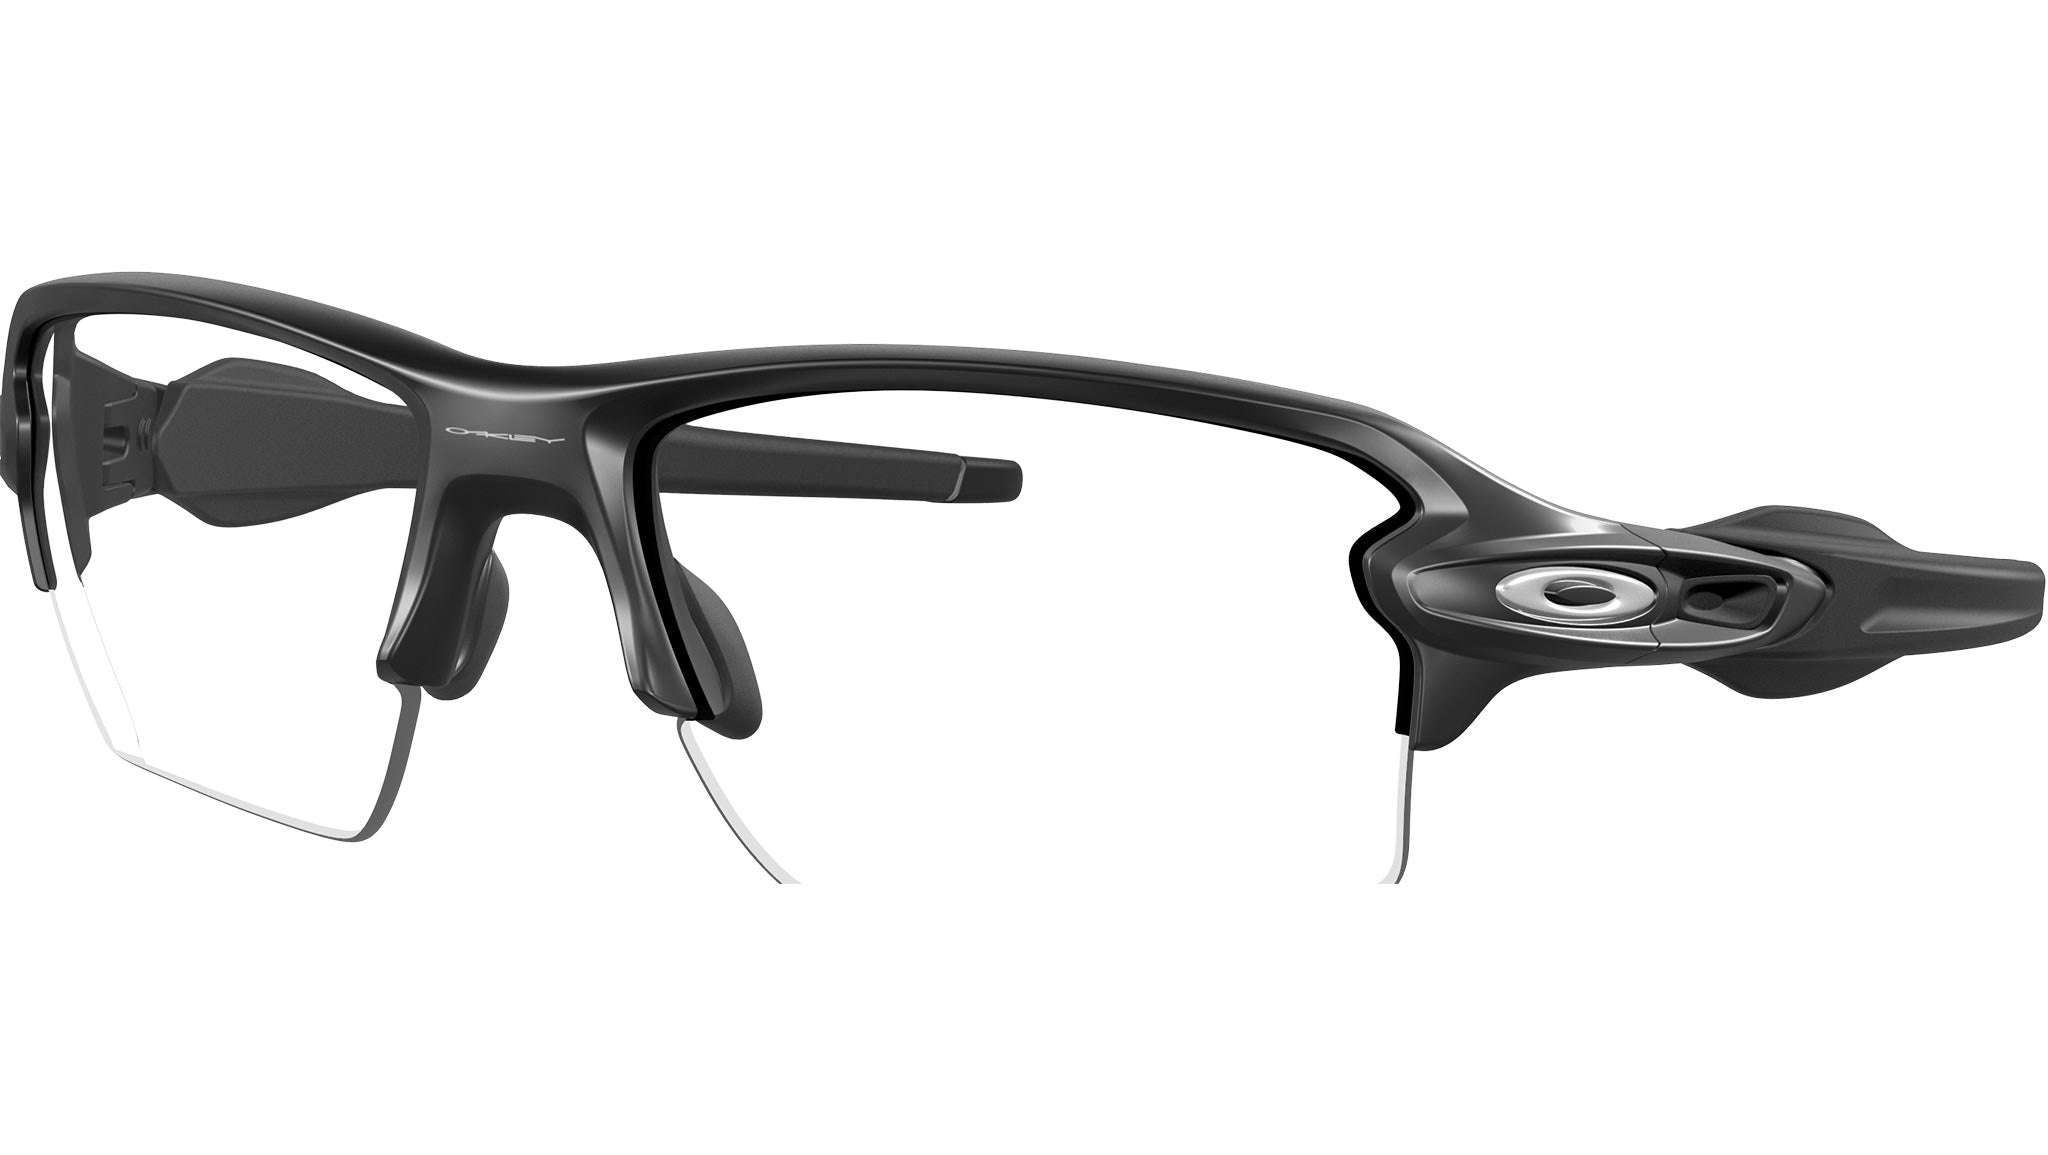 Flak® 2.0 XL sunglasses in black - Oakley